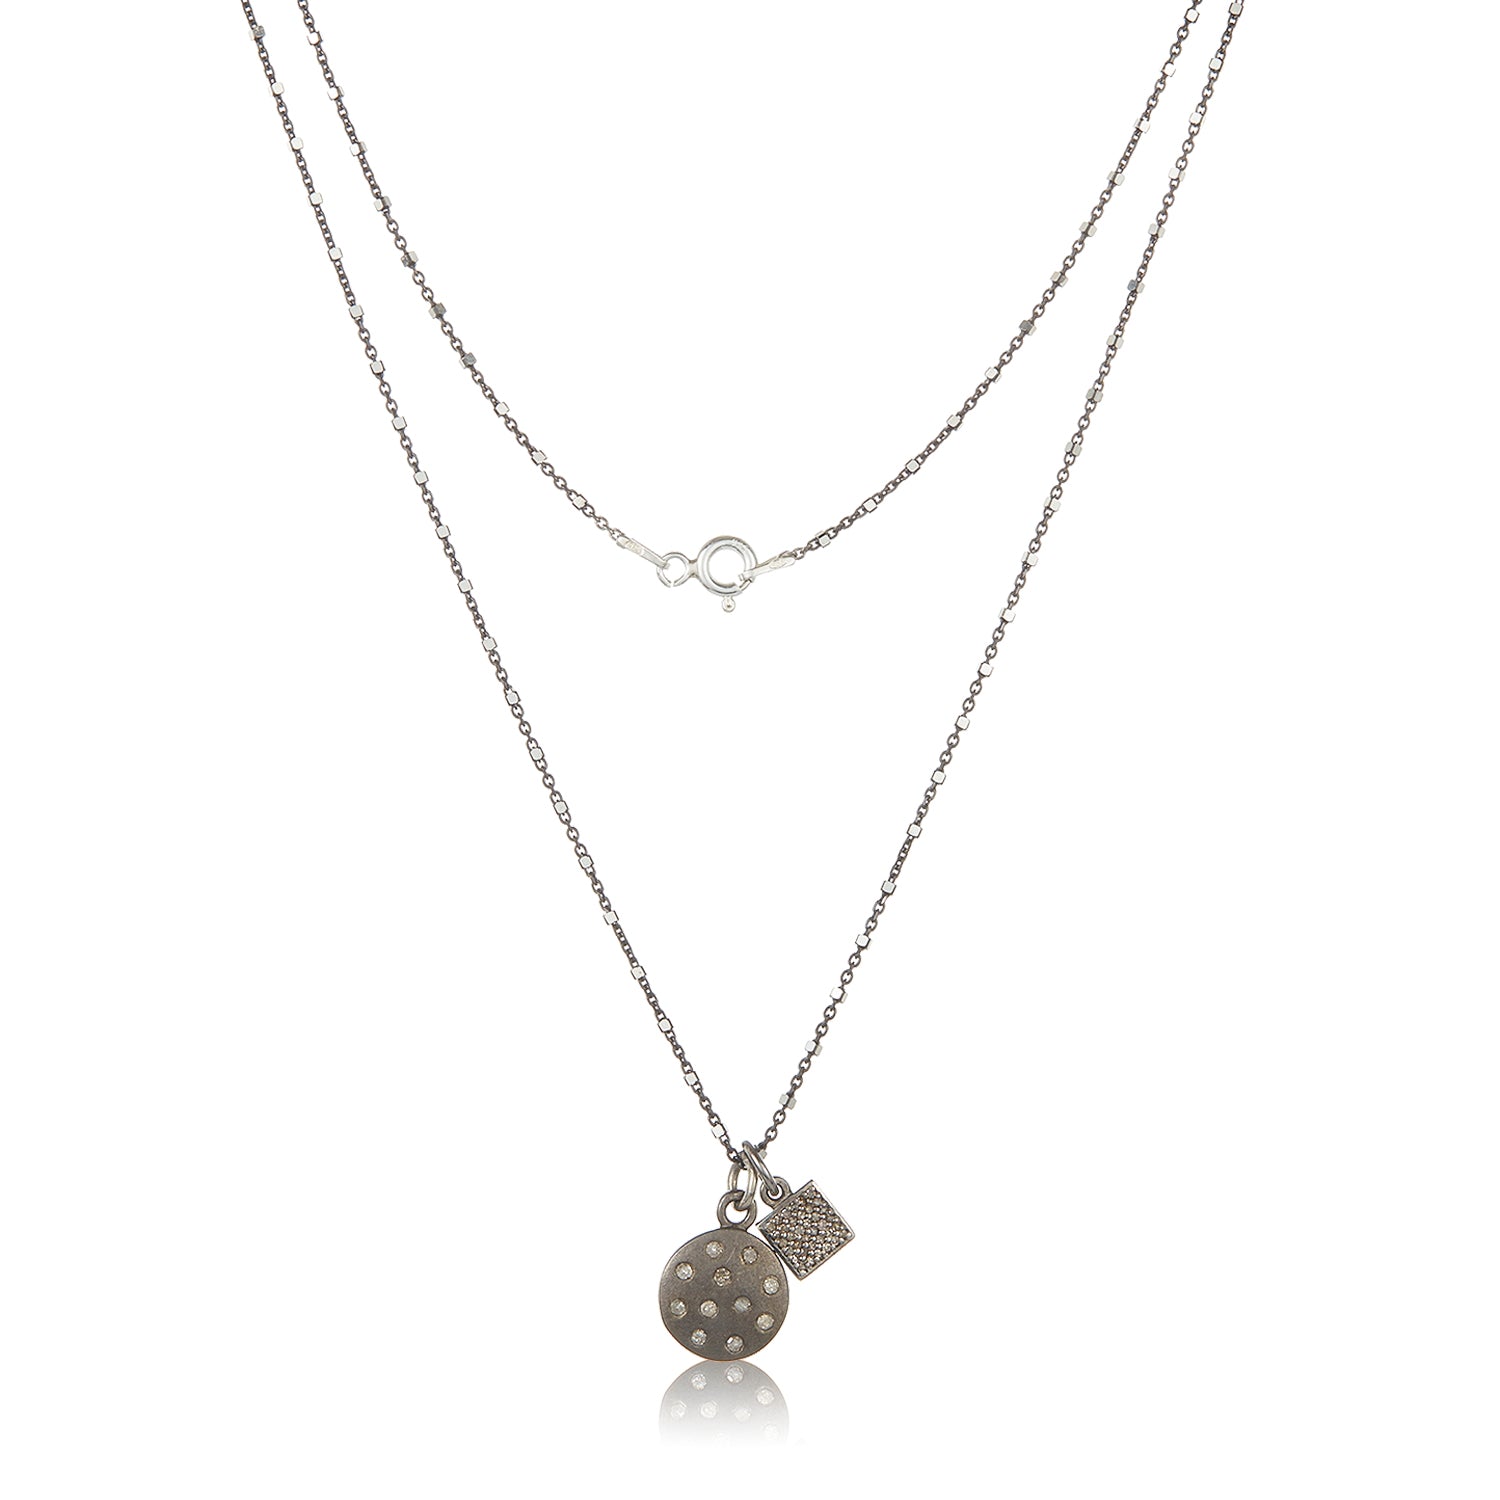 Tagalong Diamond Necklace II